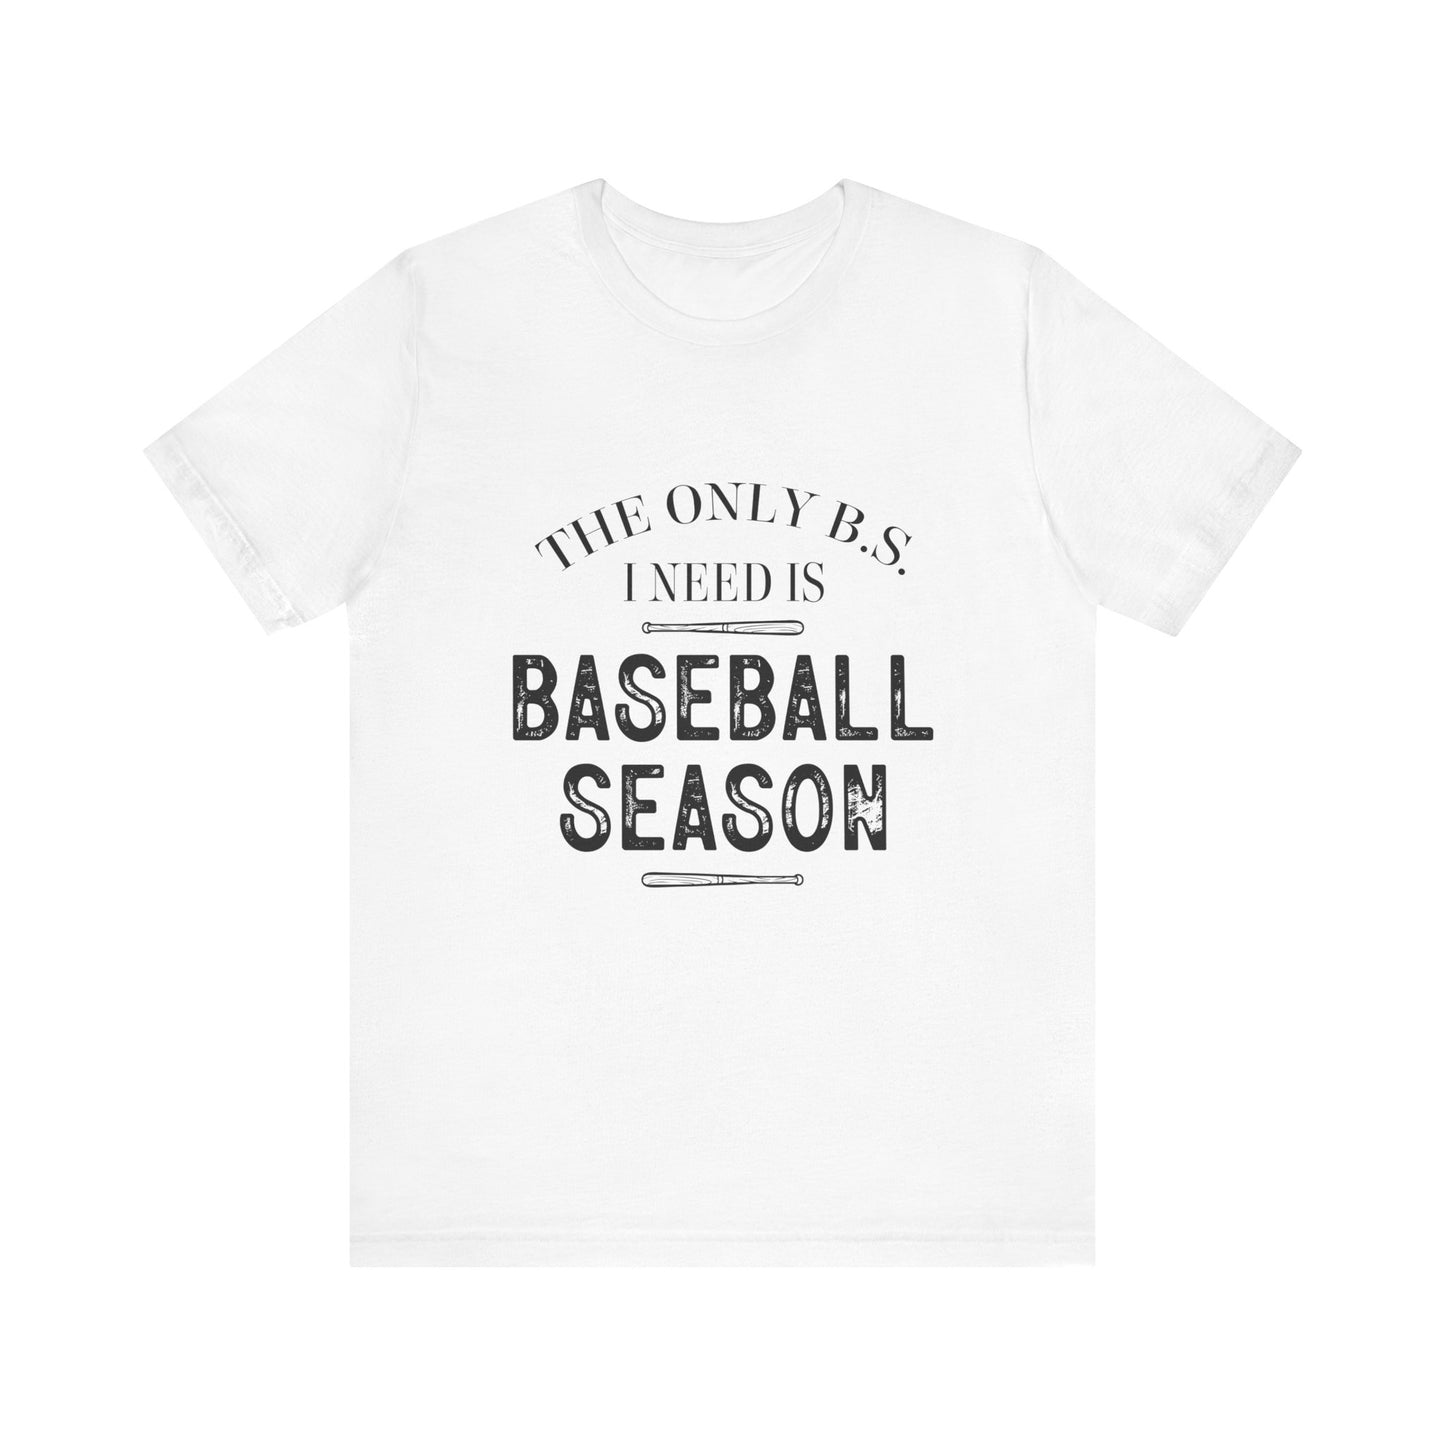 The Only B.S. I need is Baseball Season Funny Adult Unisex Tshirt  Short Sleeve Tee